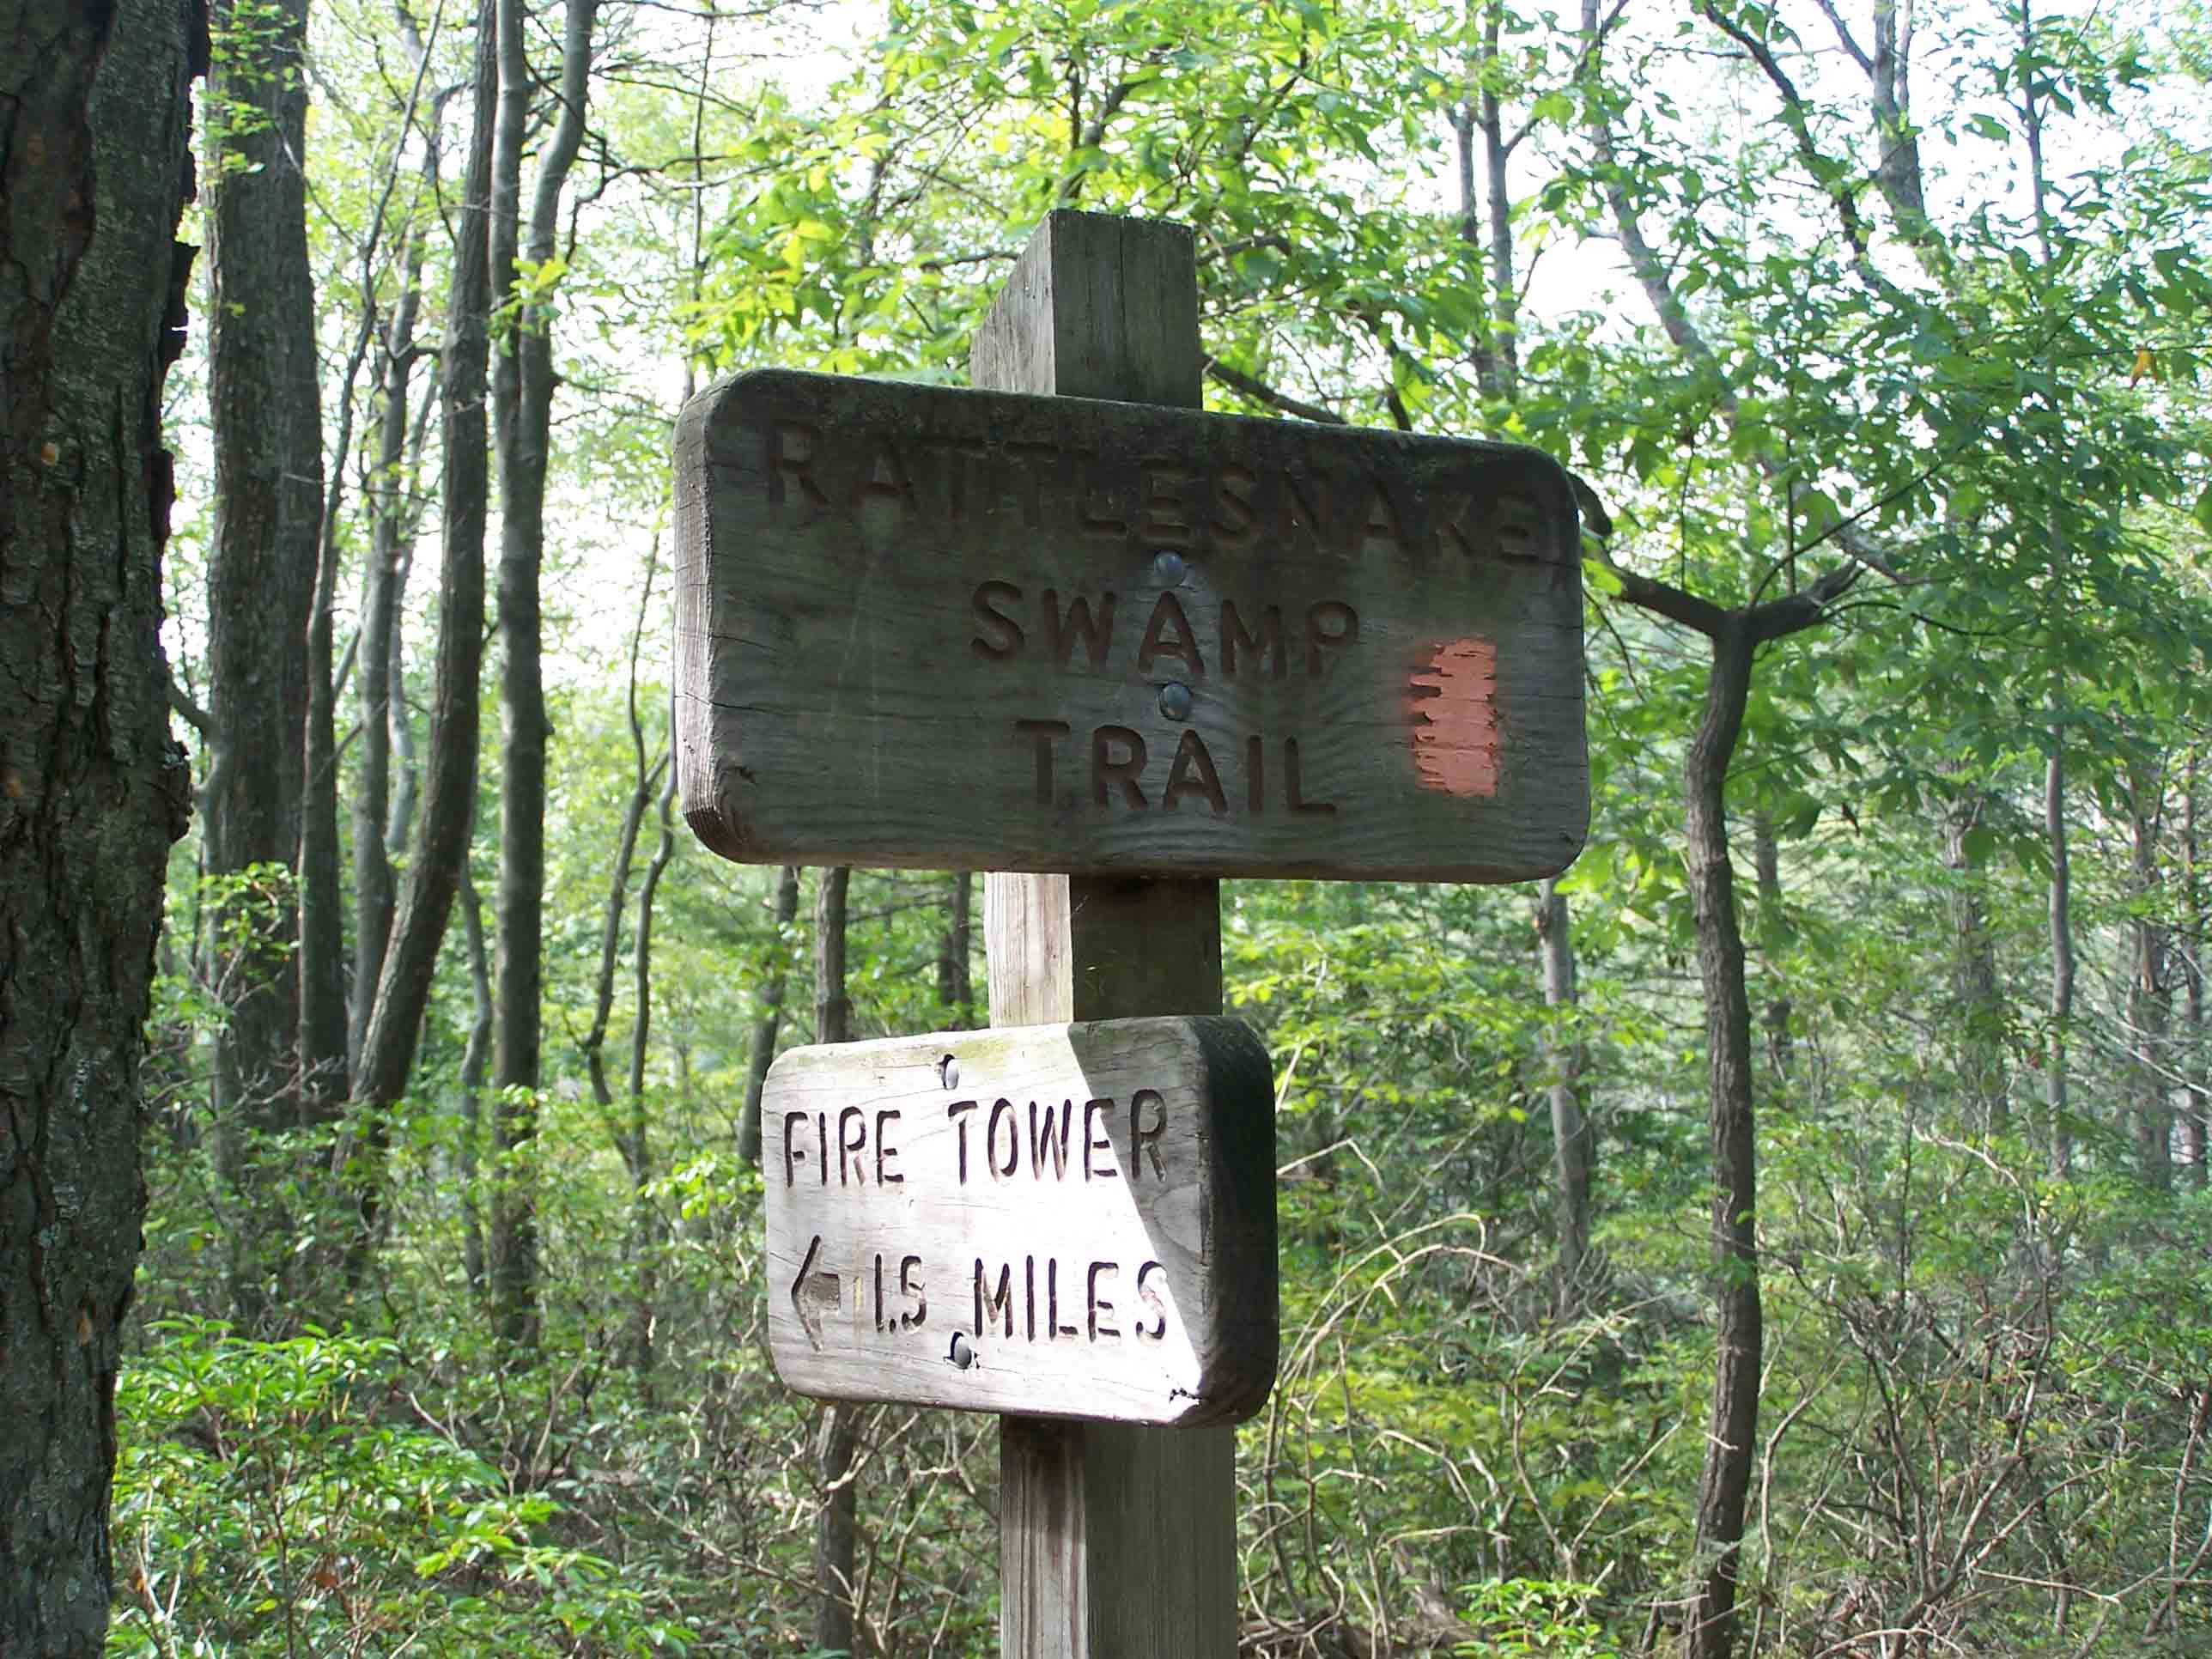 mm 0.3 Northern trailhead of the orange-blazed Rattlesnake Swamp Trail. Courtesy at@rohland.org